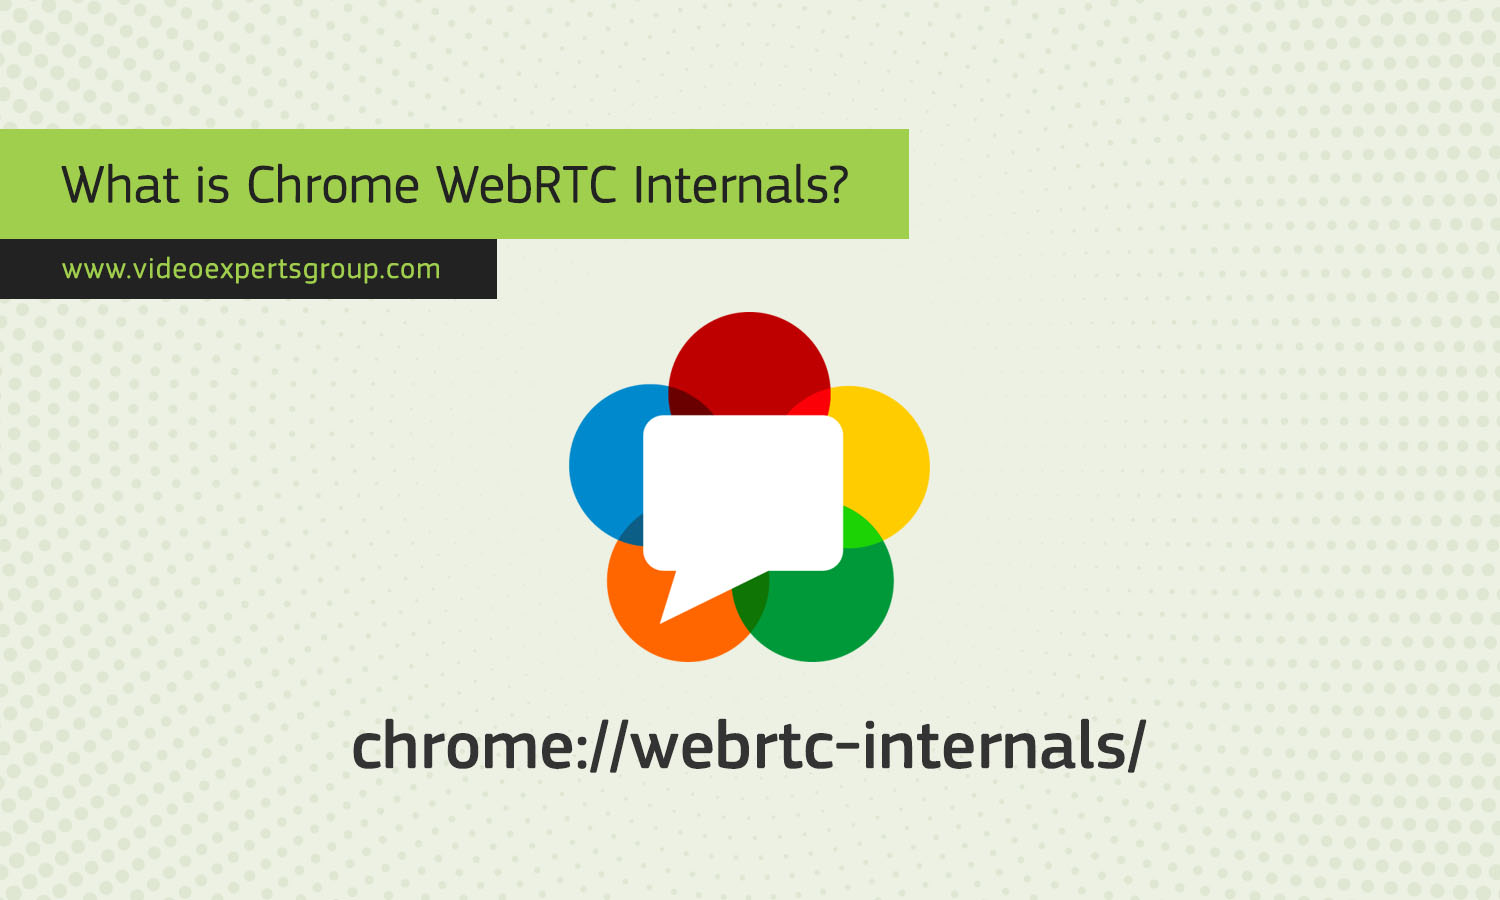 What is Chrome WebRTC Internals?